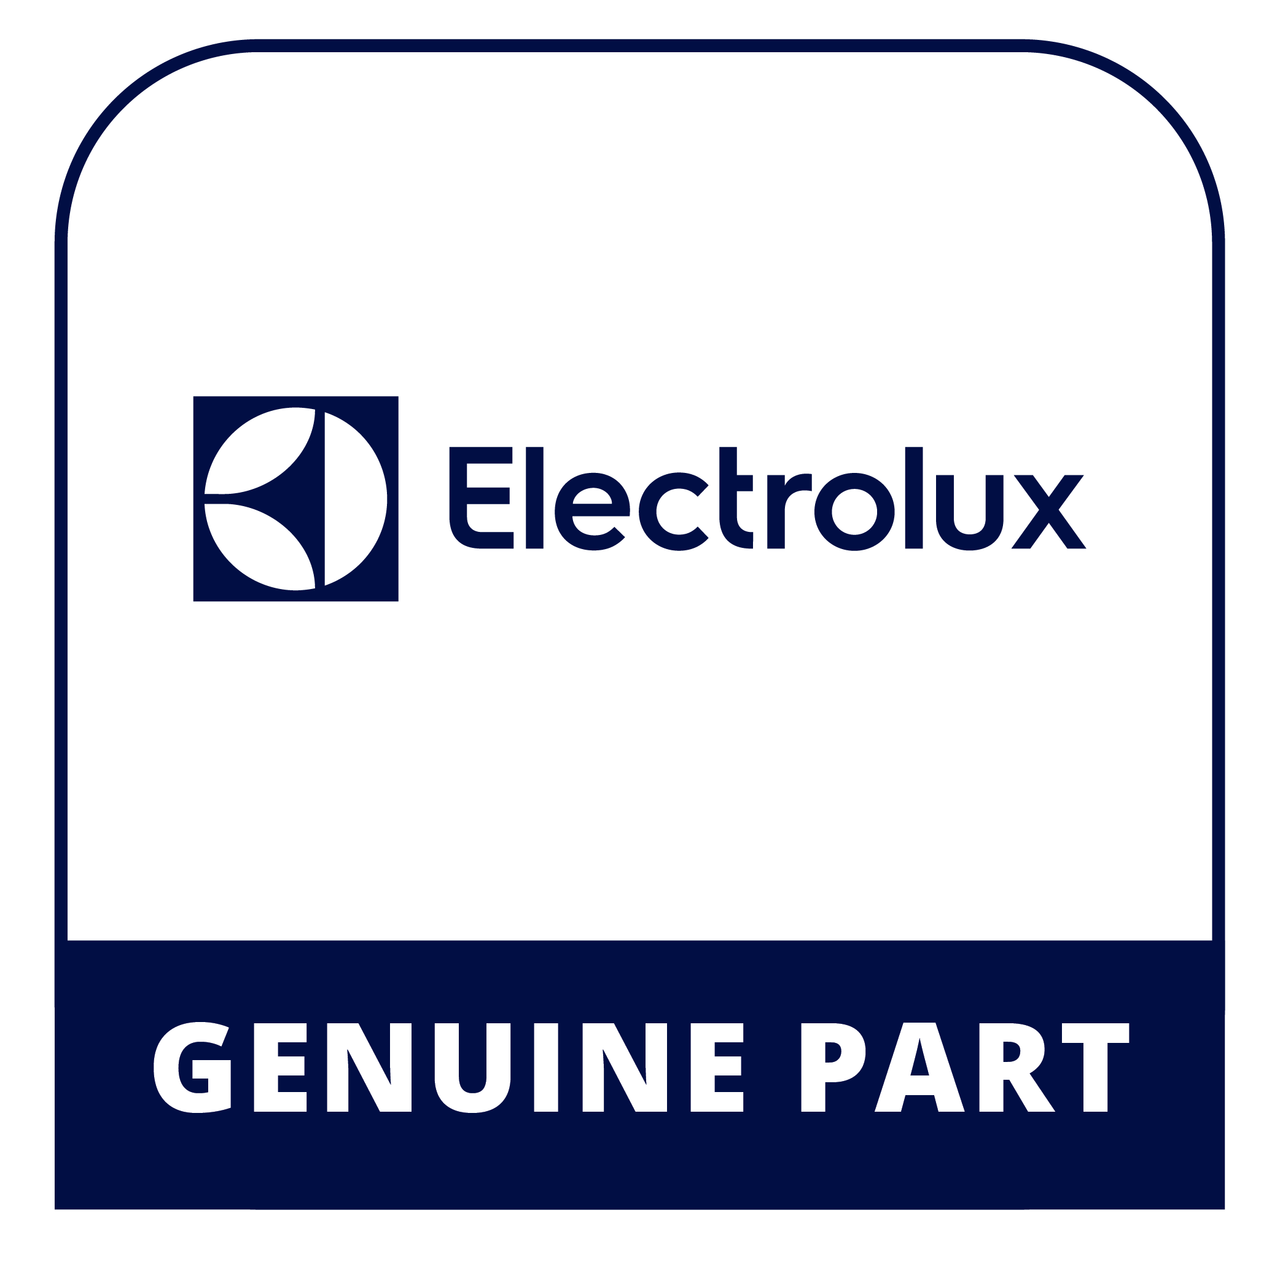 Frigidaire - Electrolux 5303918709 Control Box Kit - Genuine Electrolux Part